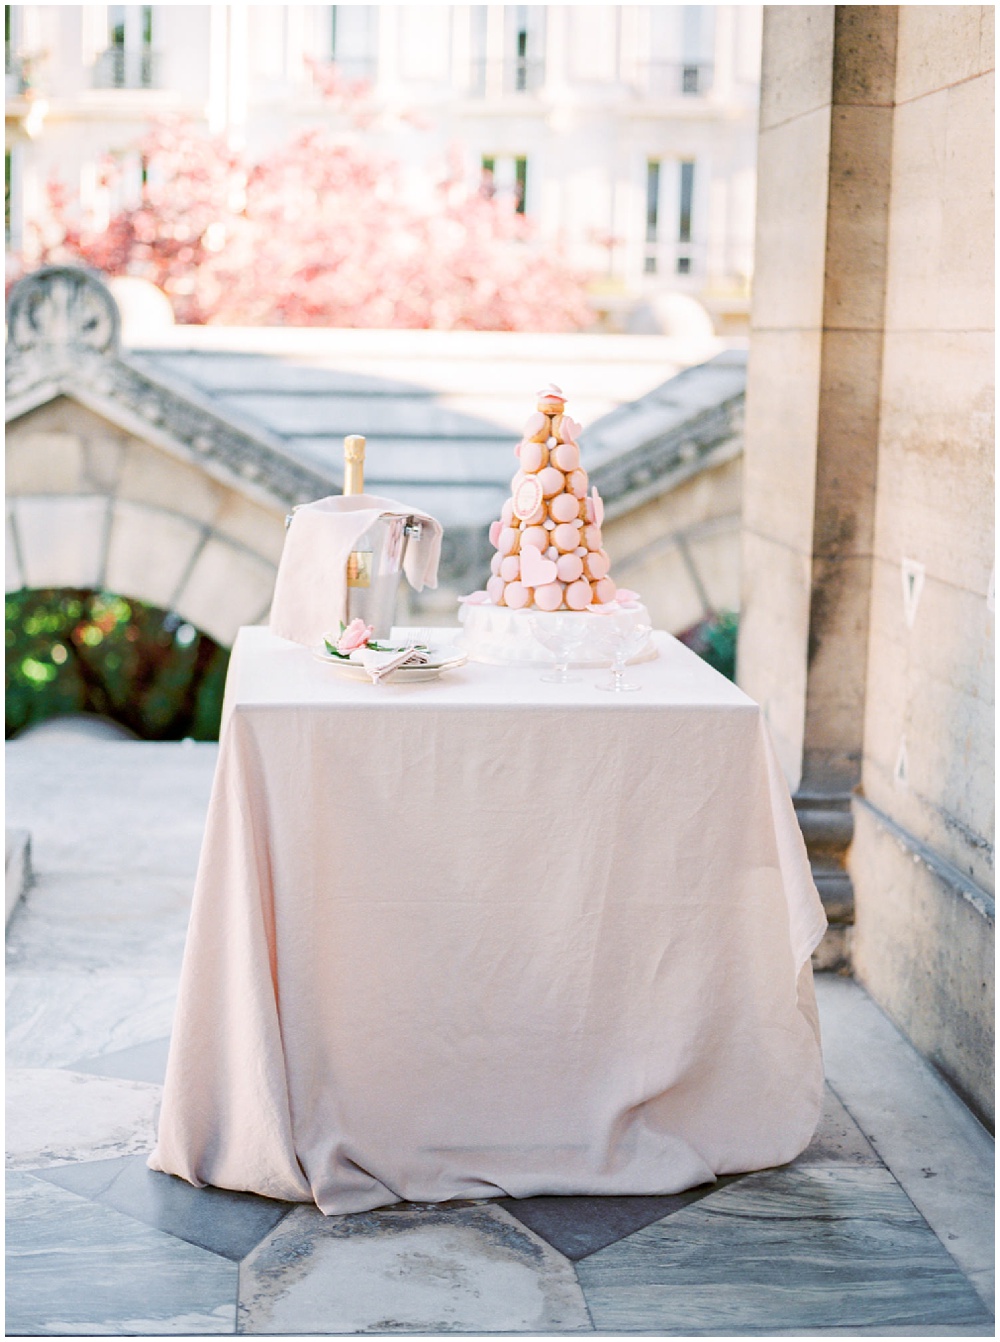 Top 10 Best Wedding Venues in Paris - Chapelle Expiatoire - Paris Wedding